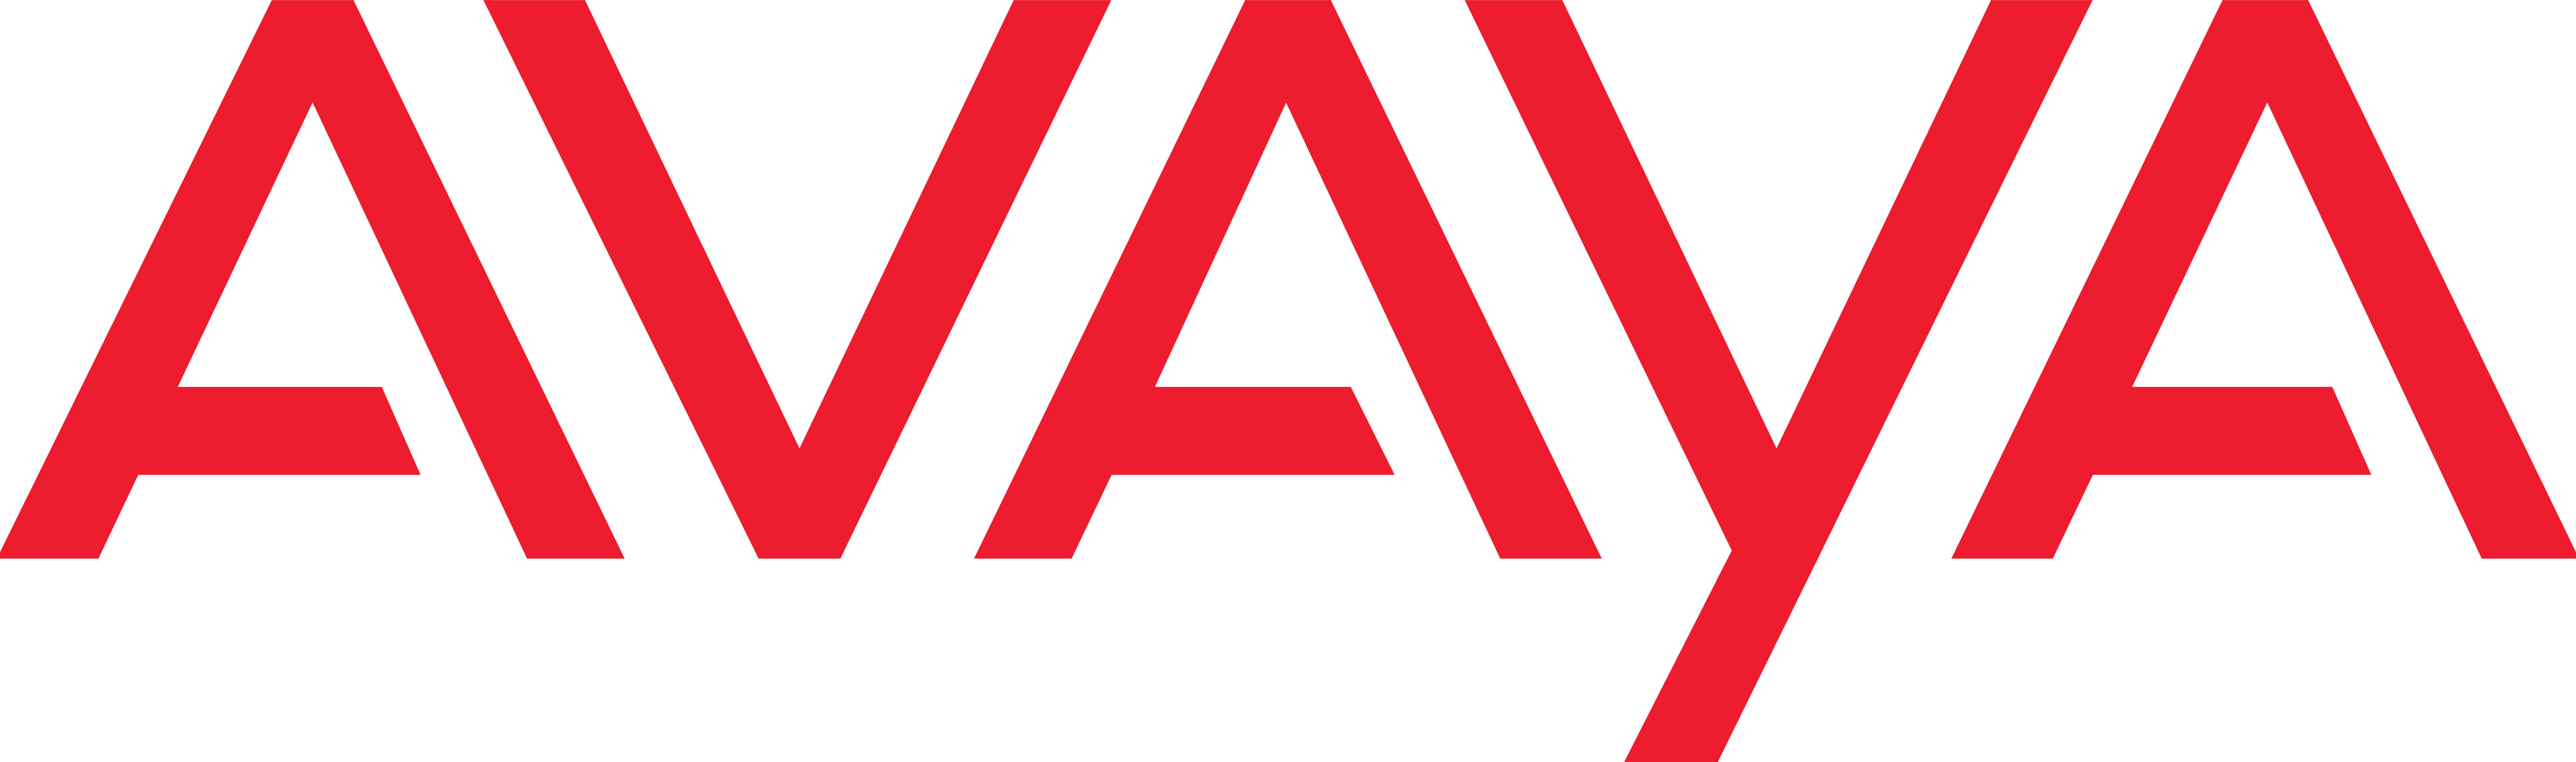 Avaya Business Partner Logo - KibrisPDR